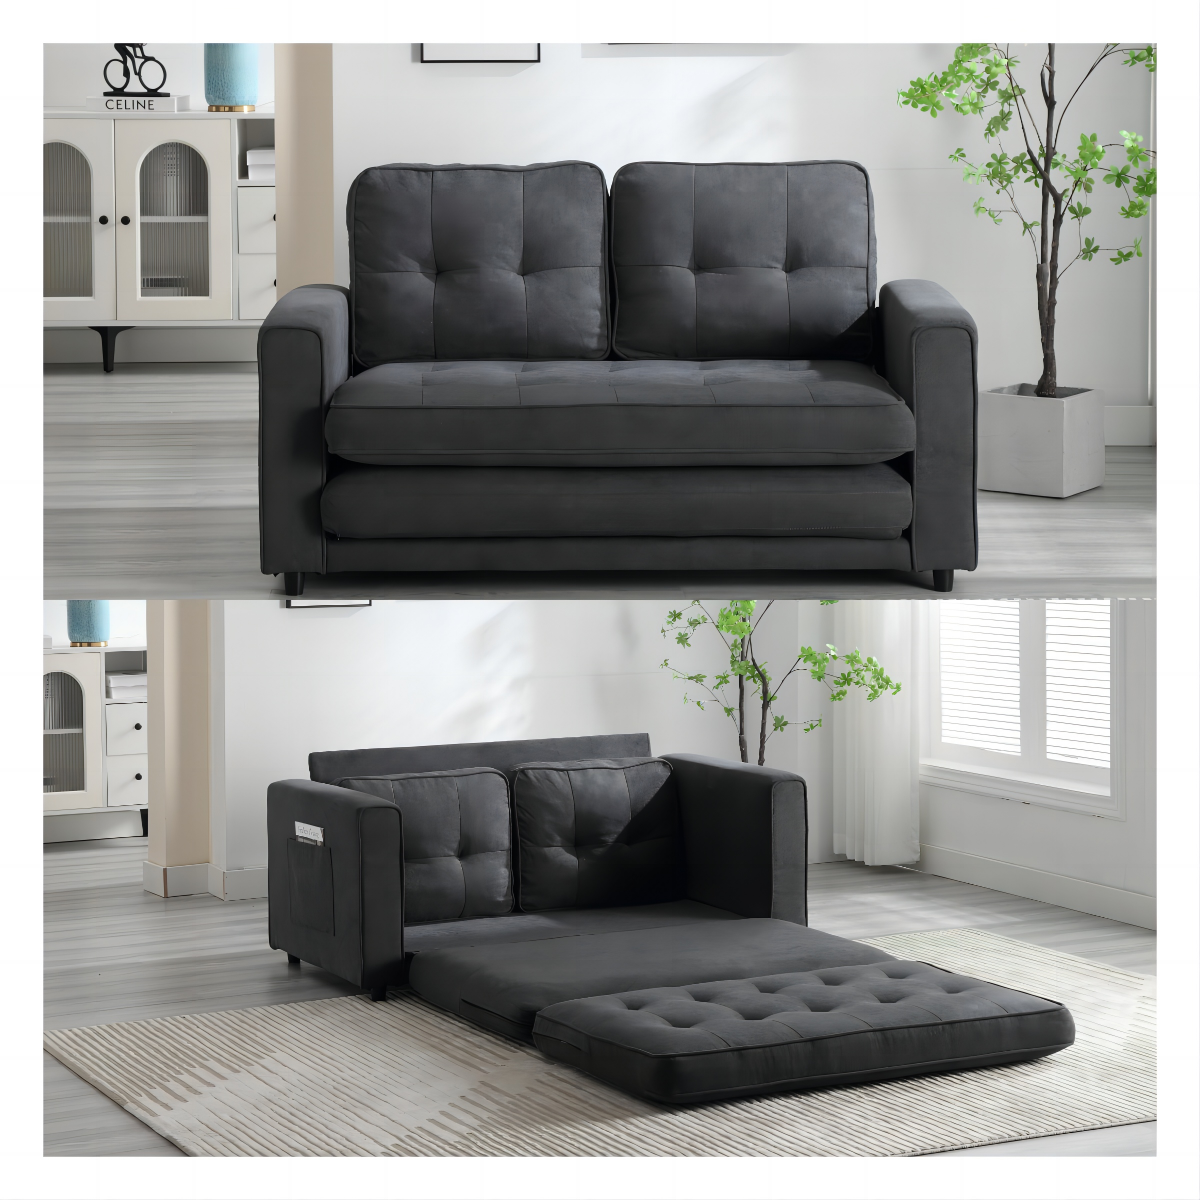 3 Fold Sofa,Convertible Futon Couch sleeper dark gray-velvet